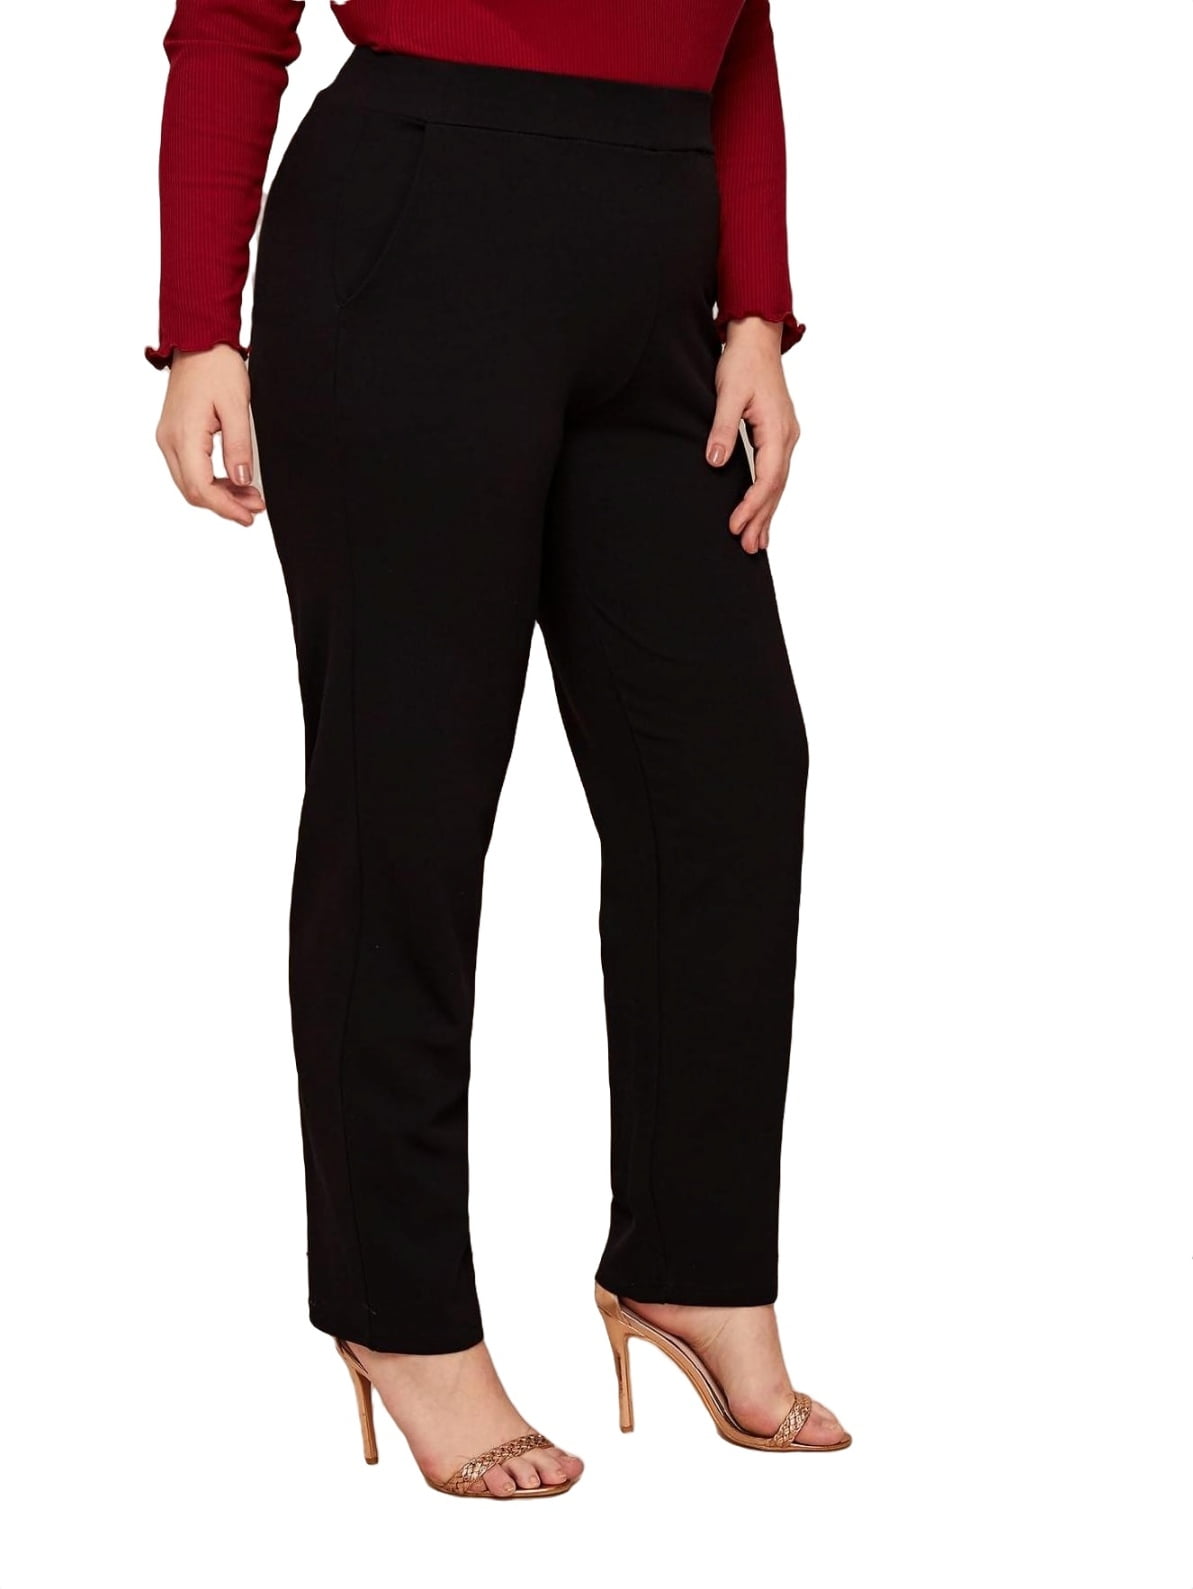 Women's Plus Size High Waist Slant Pocket Straight Tailored Pants 3XL(18) 